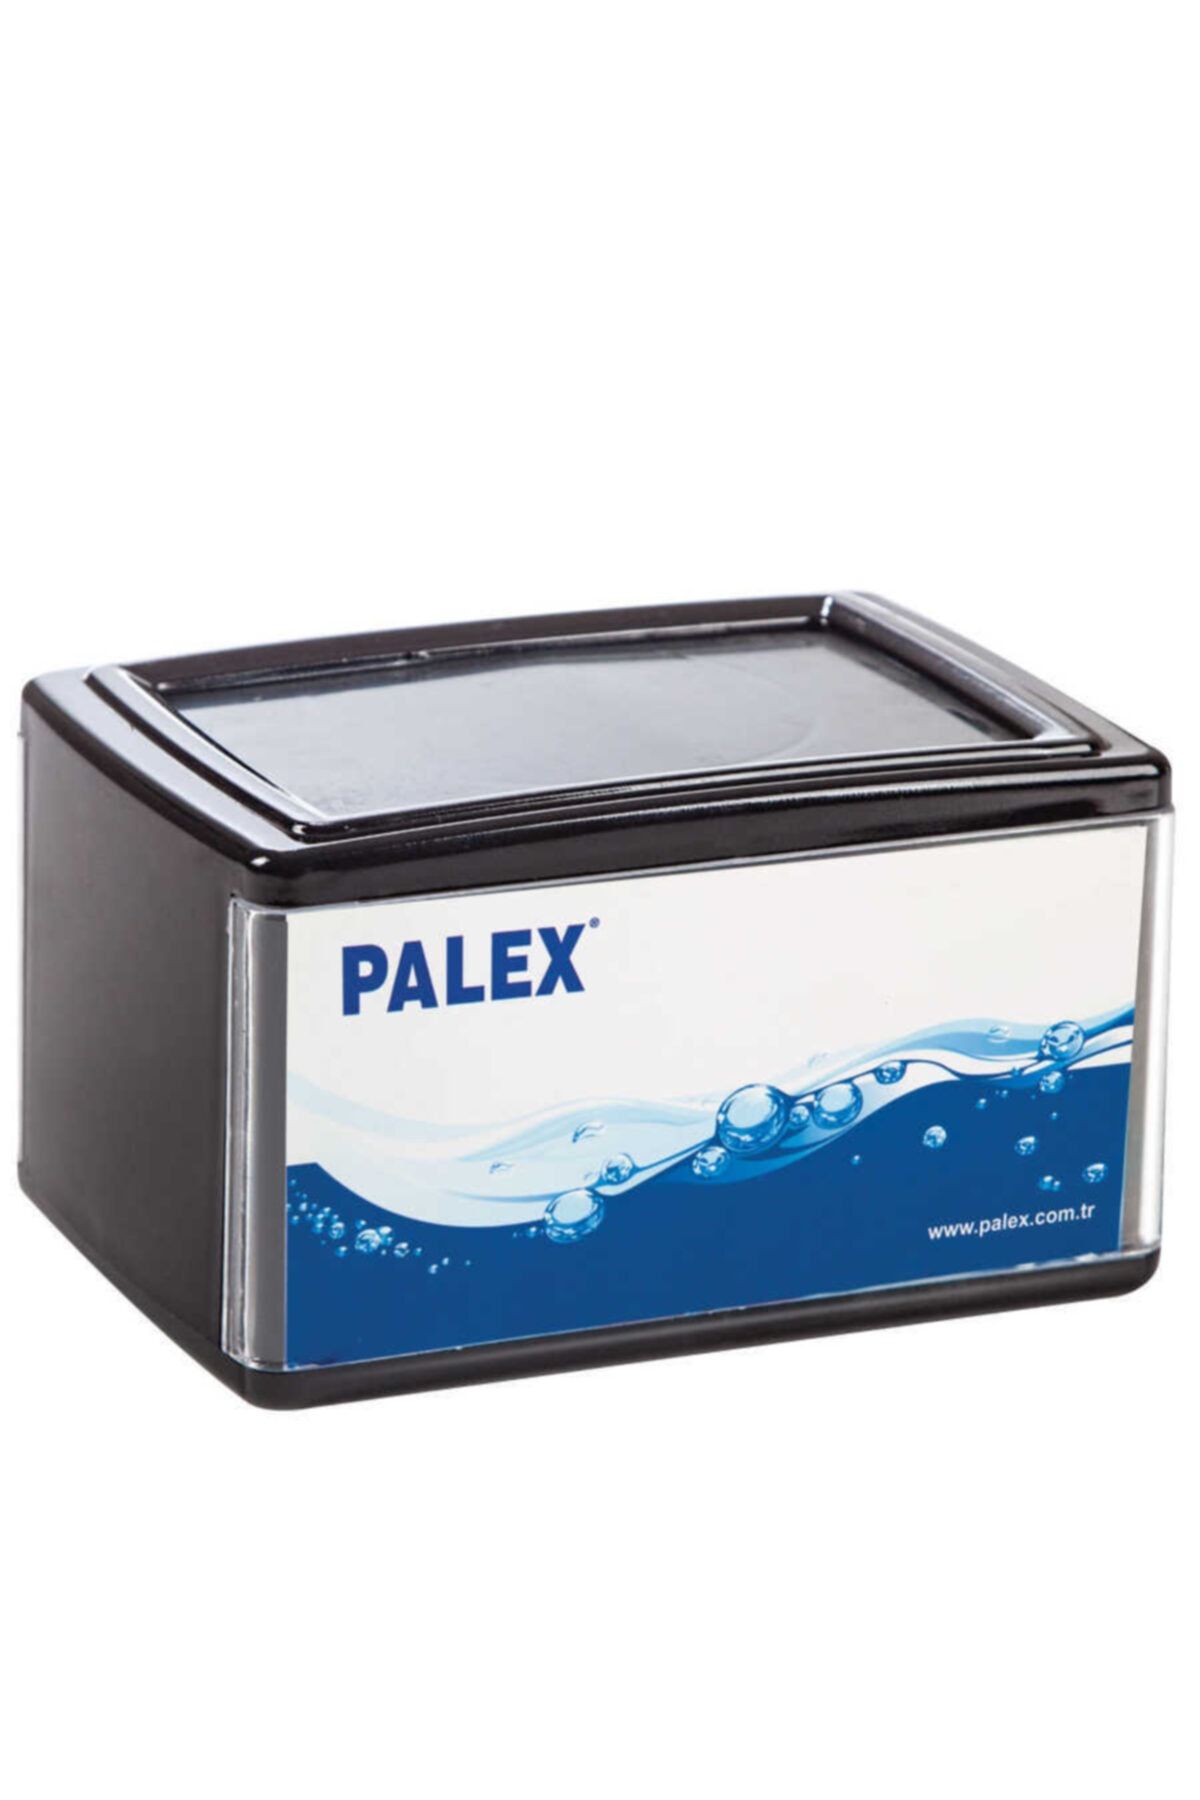 Palex 3536-s Dispenser Yatay Peçetelik Ağır Siyah